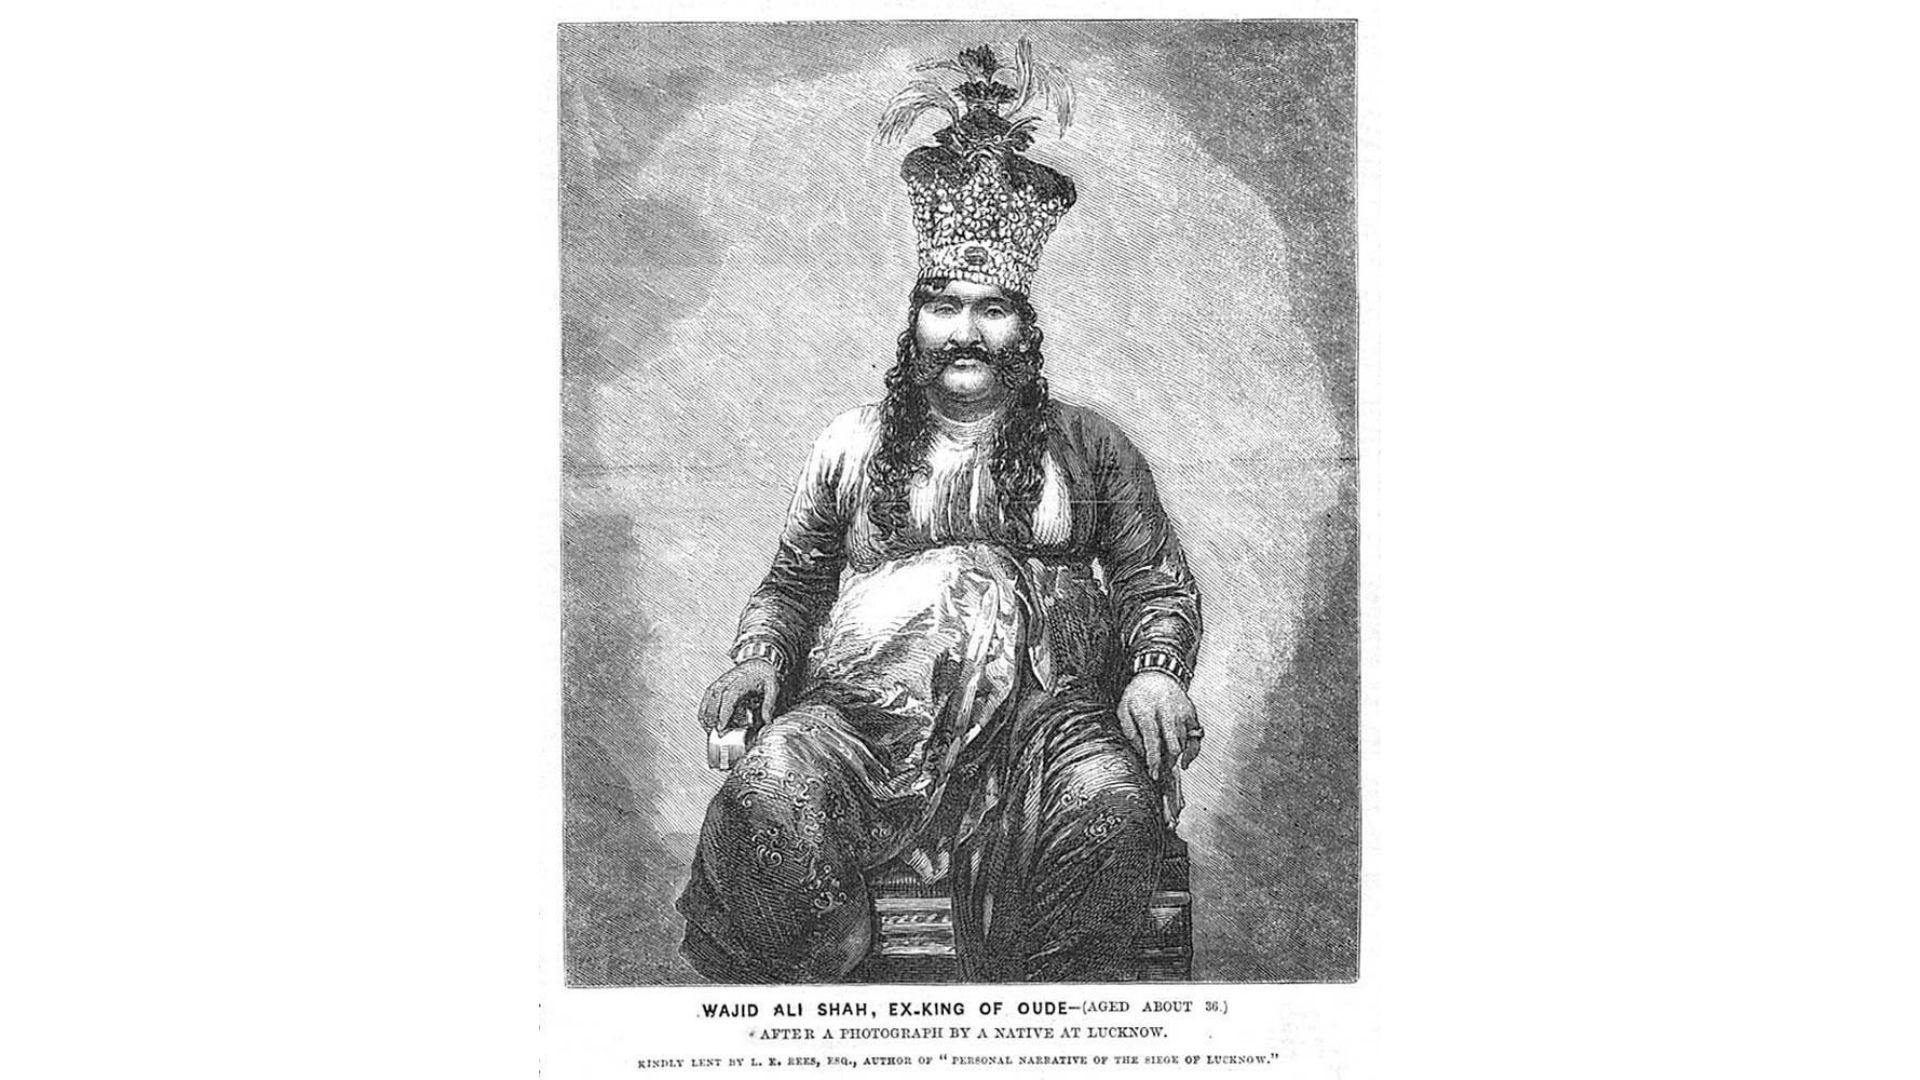 Wajid Ali Shah, Last King of Awadh and son of Queen Malika Kishwar